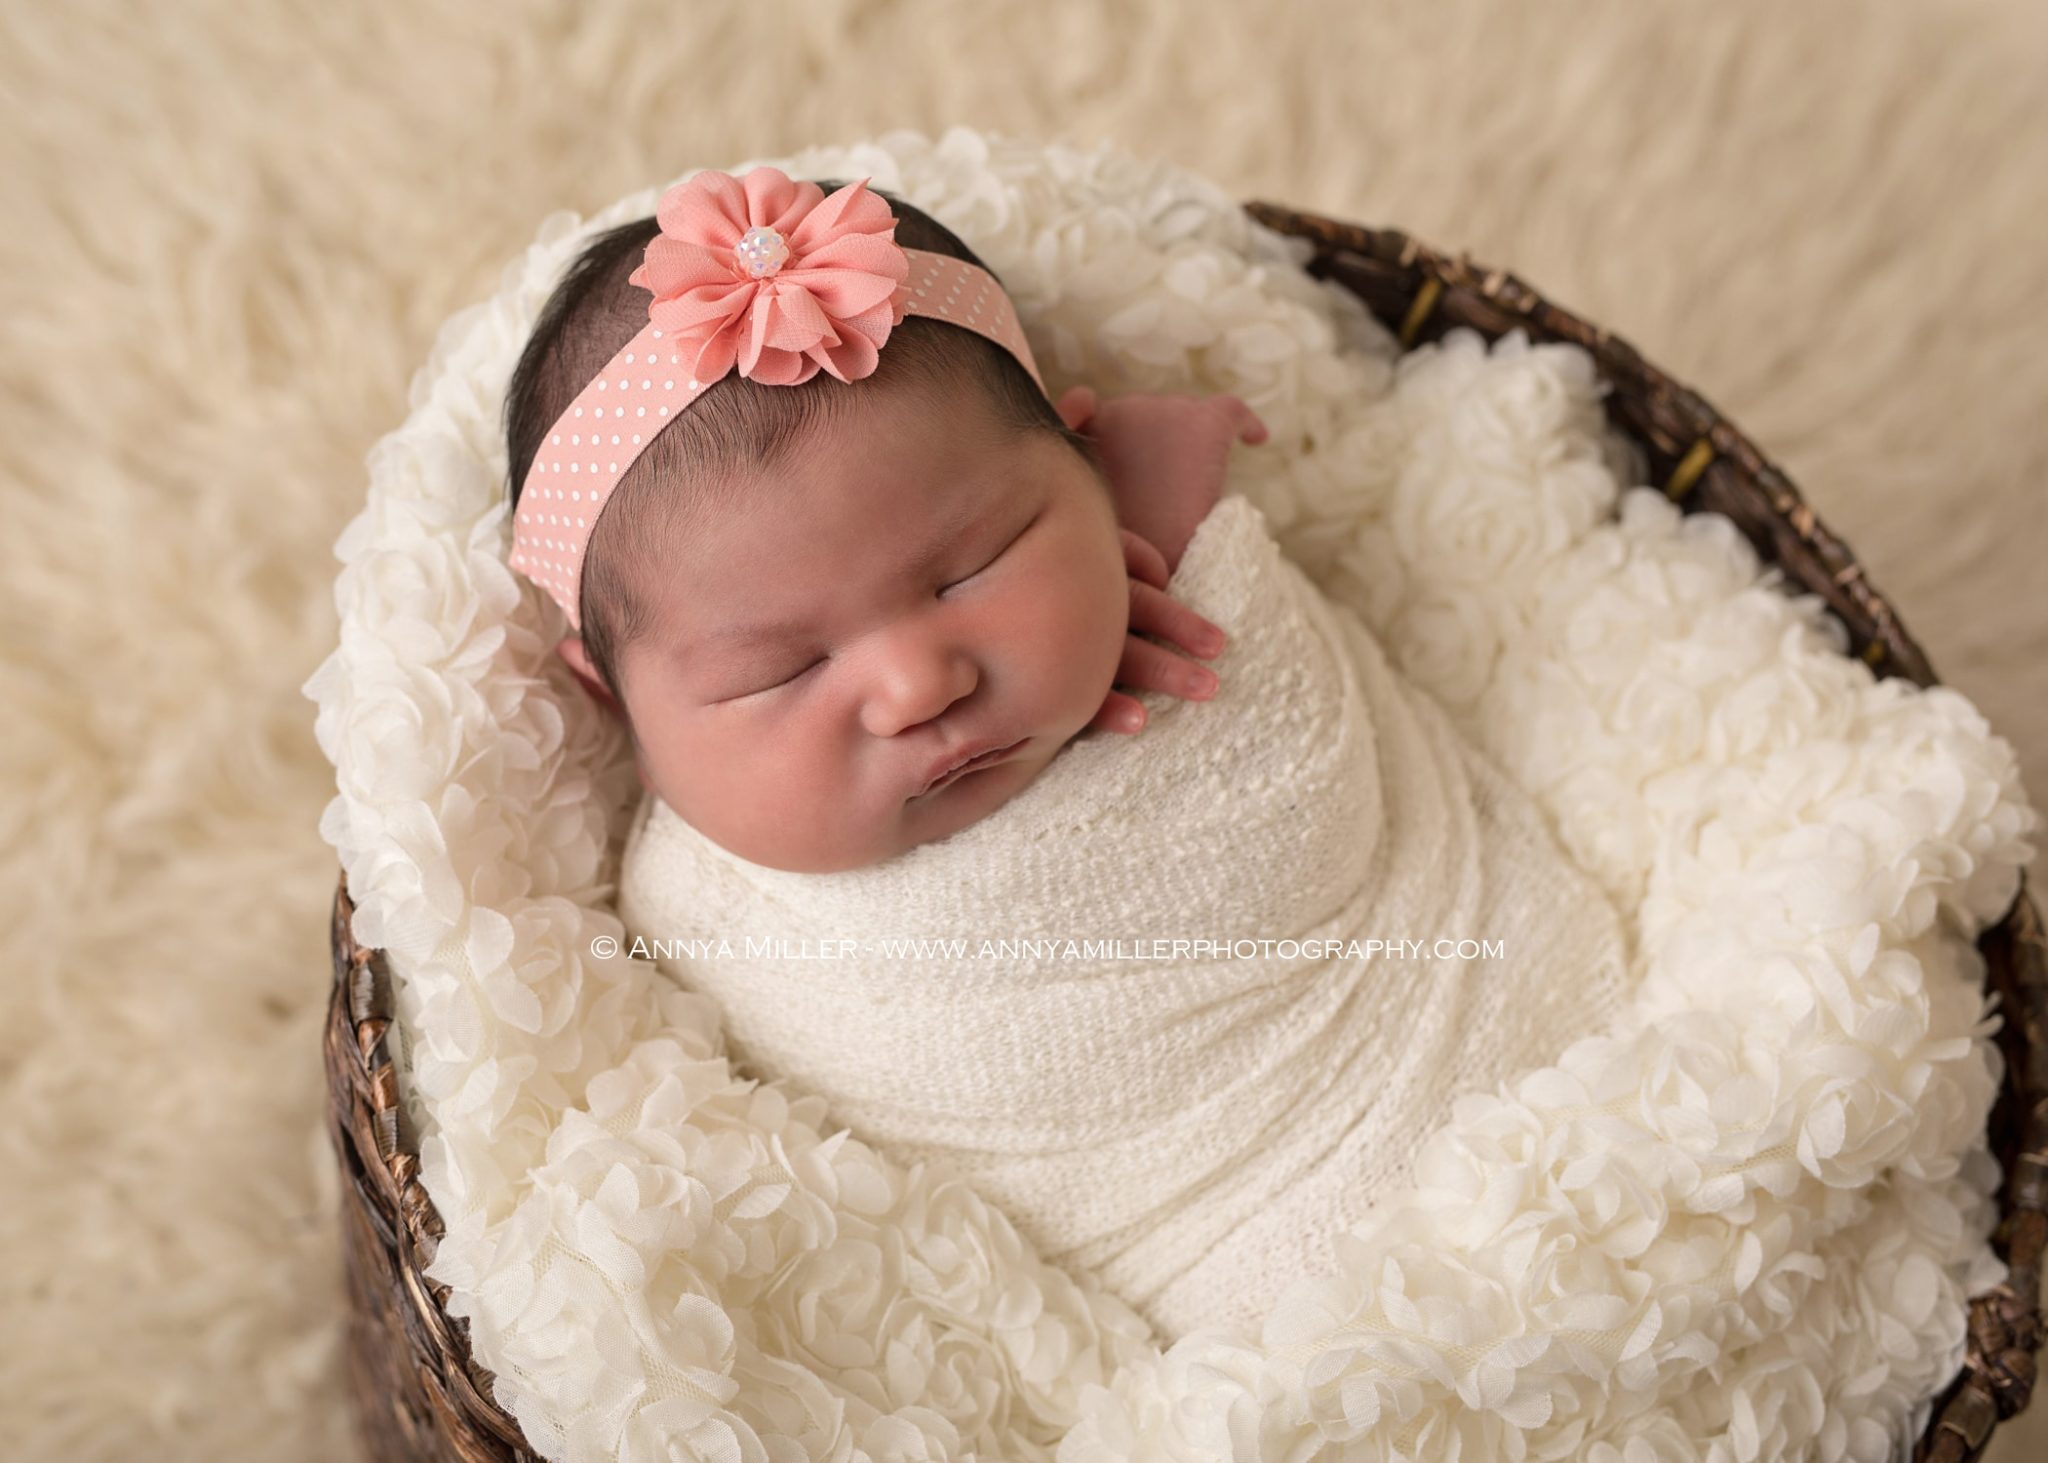 Newborn portraits of baby girl by Toronto area newborn photographer Annya Miller